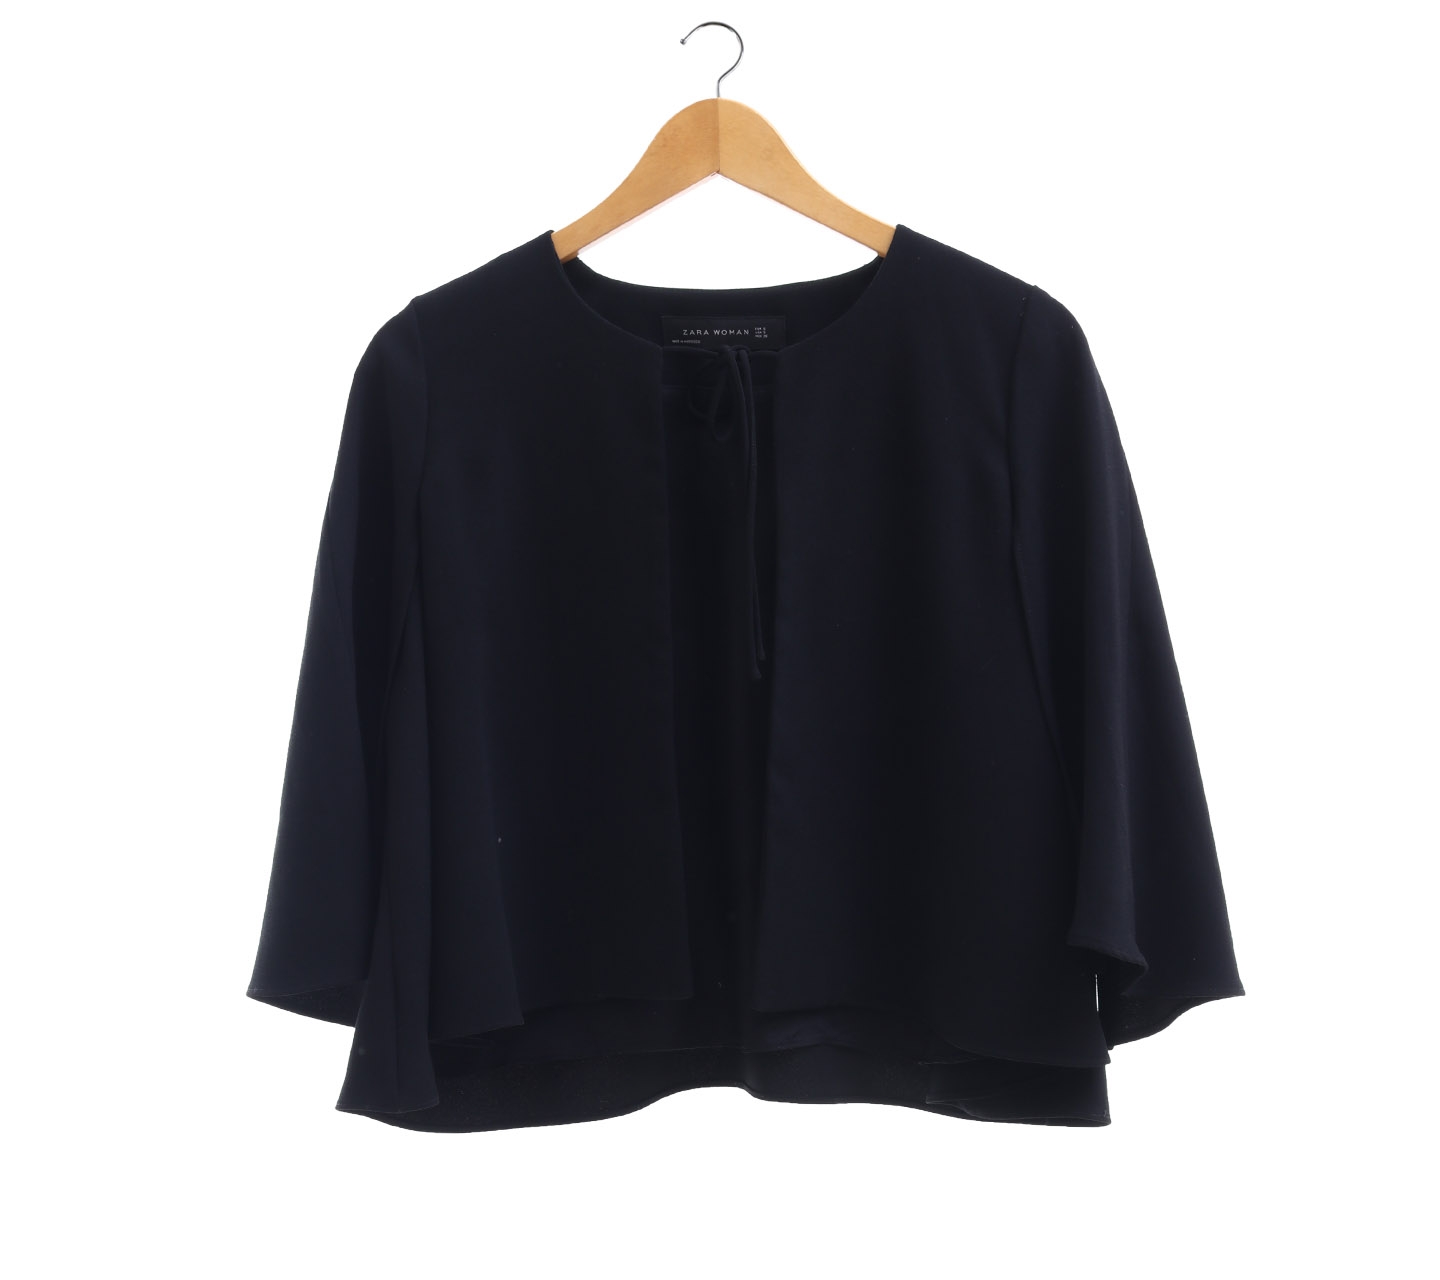 Zara Black Outerwear